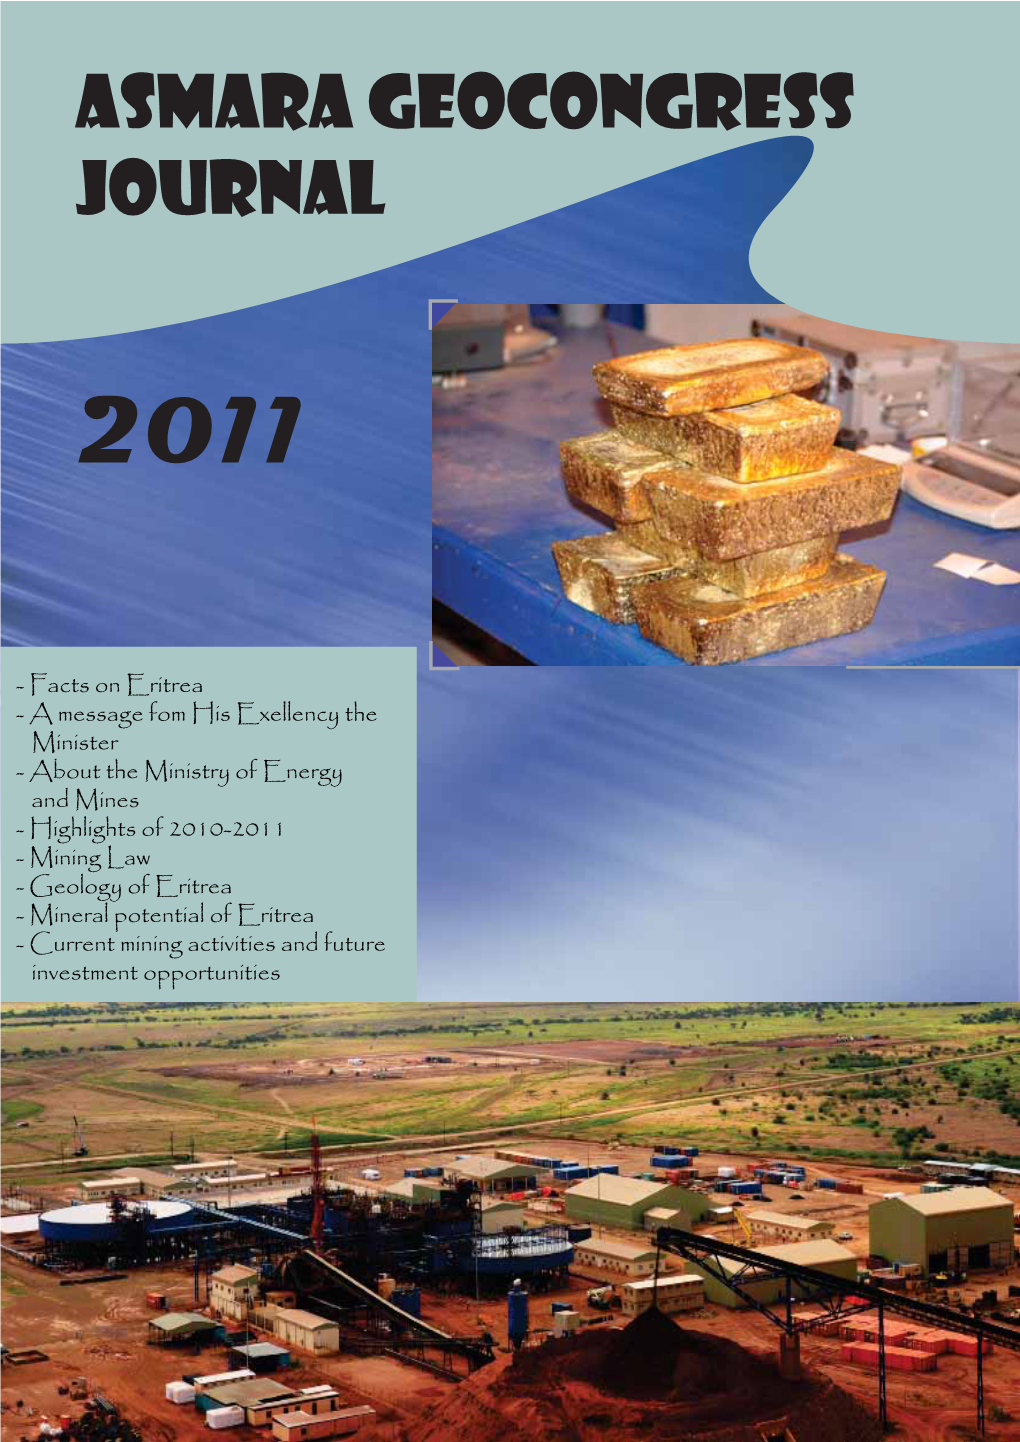 Asmara Geocongress Journal